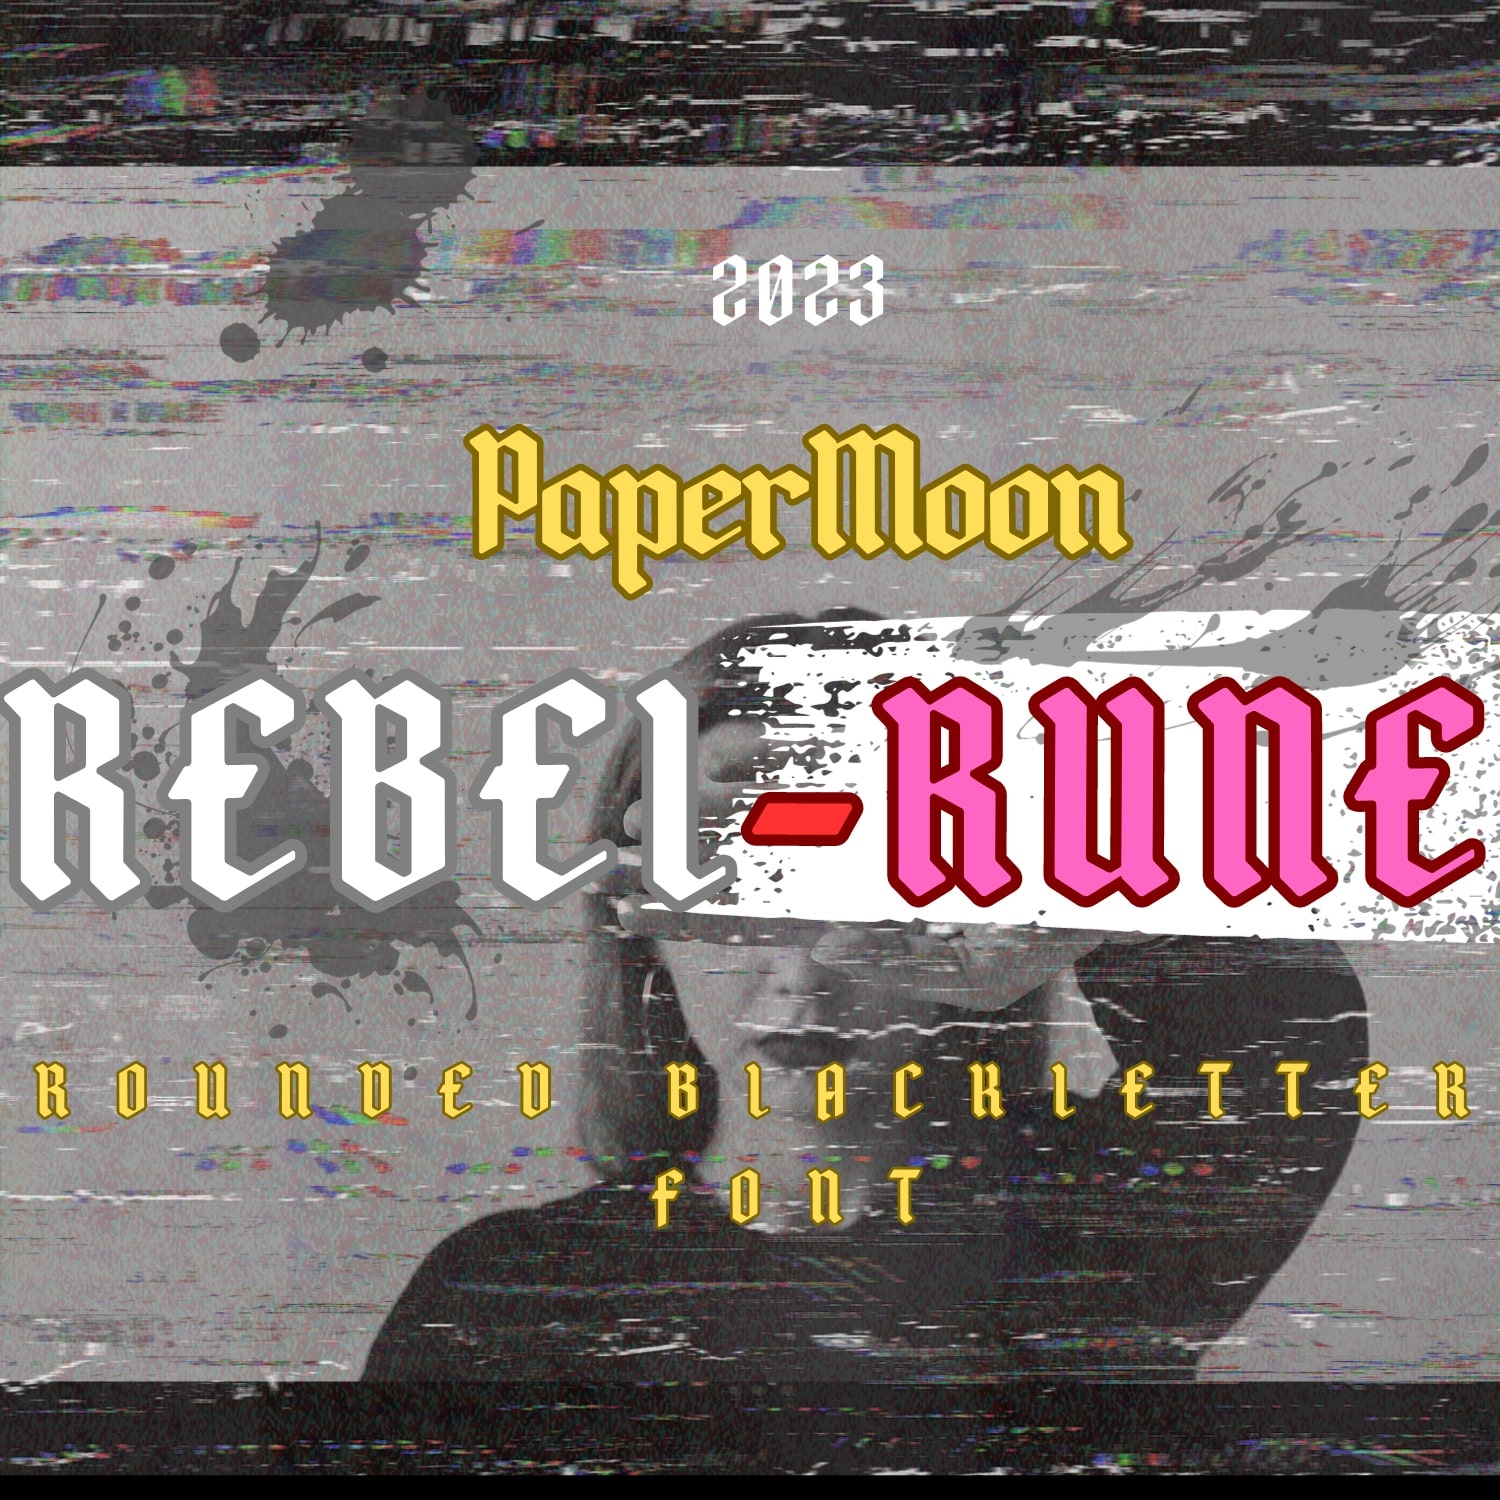 RebelRune - Rounded Blackletter Font cover image.